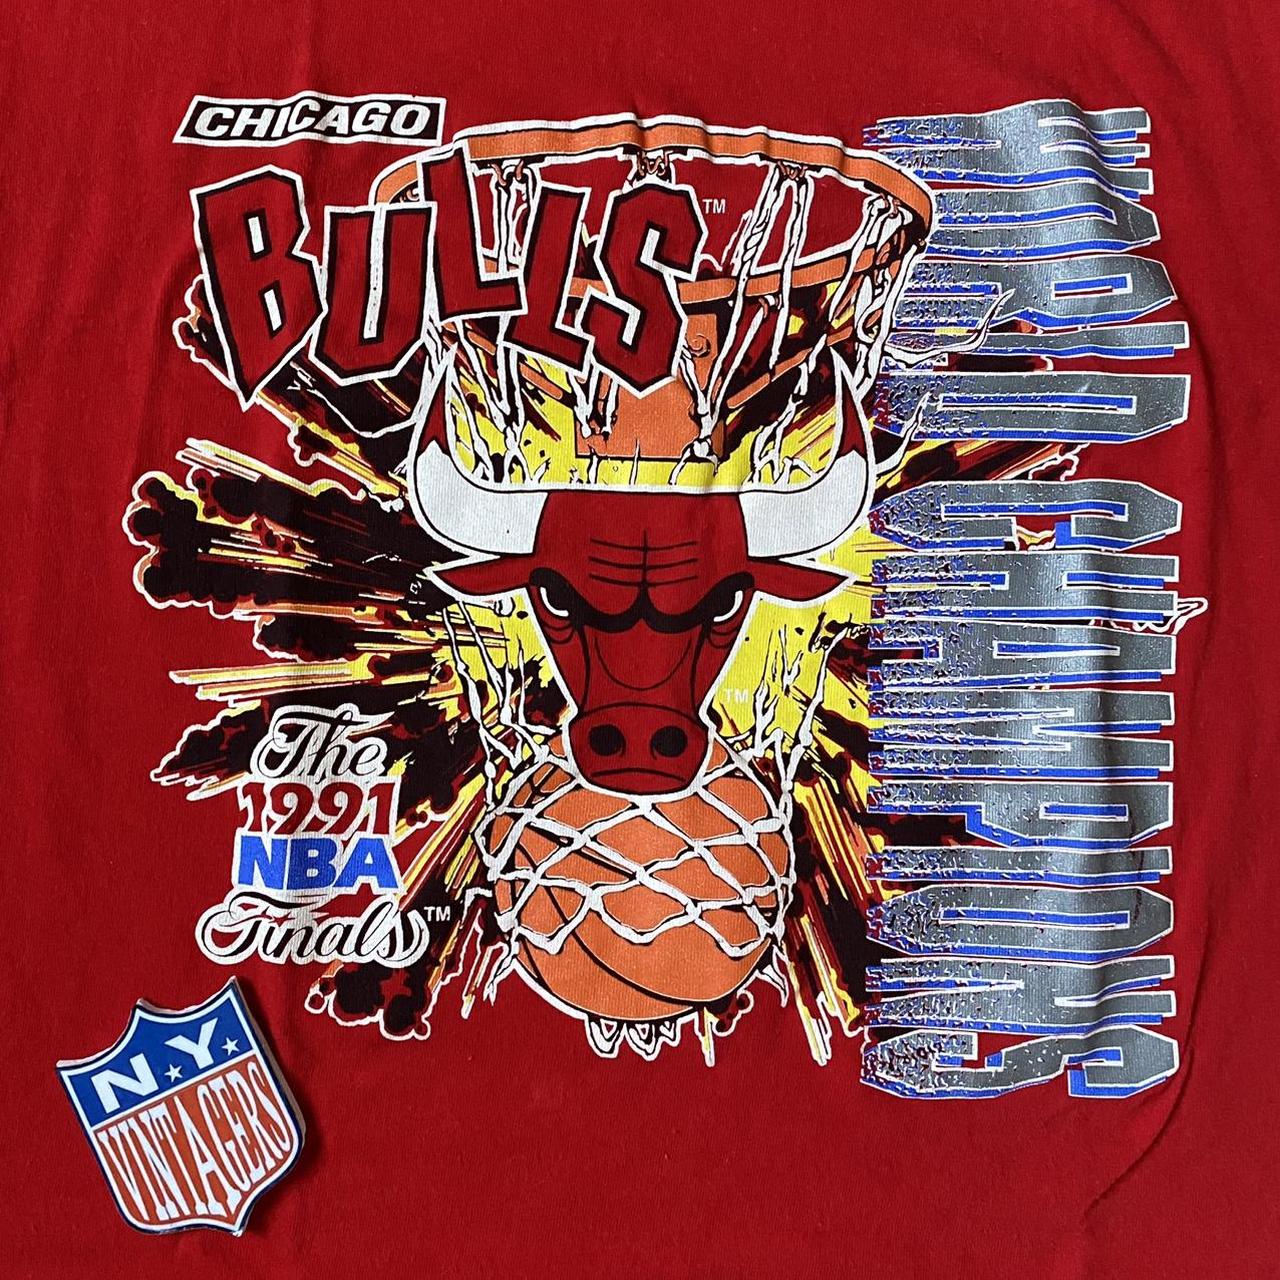 Vintage 1991 NBA World Champion Chicago Bulls - Depop